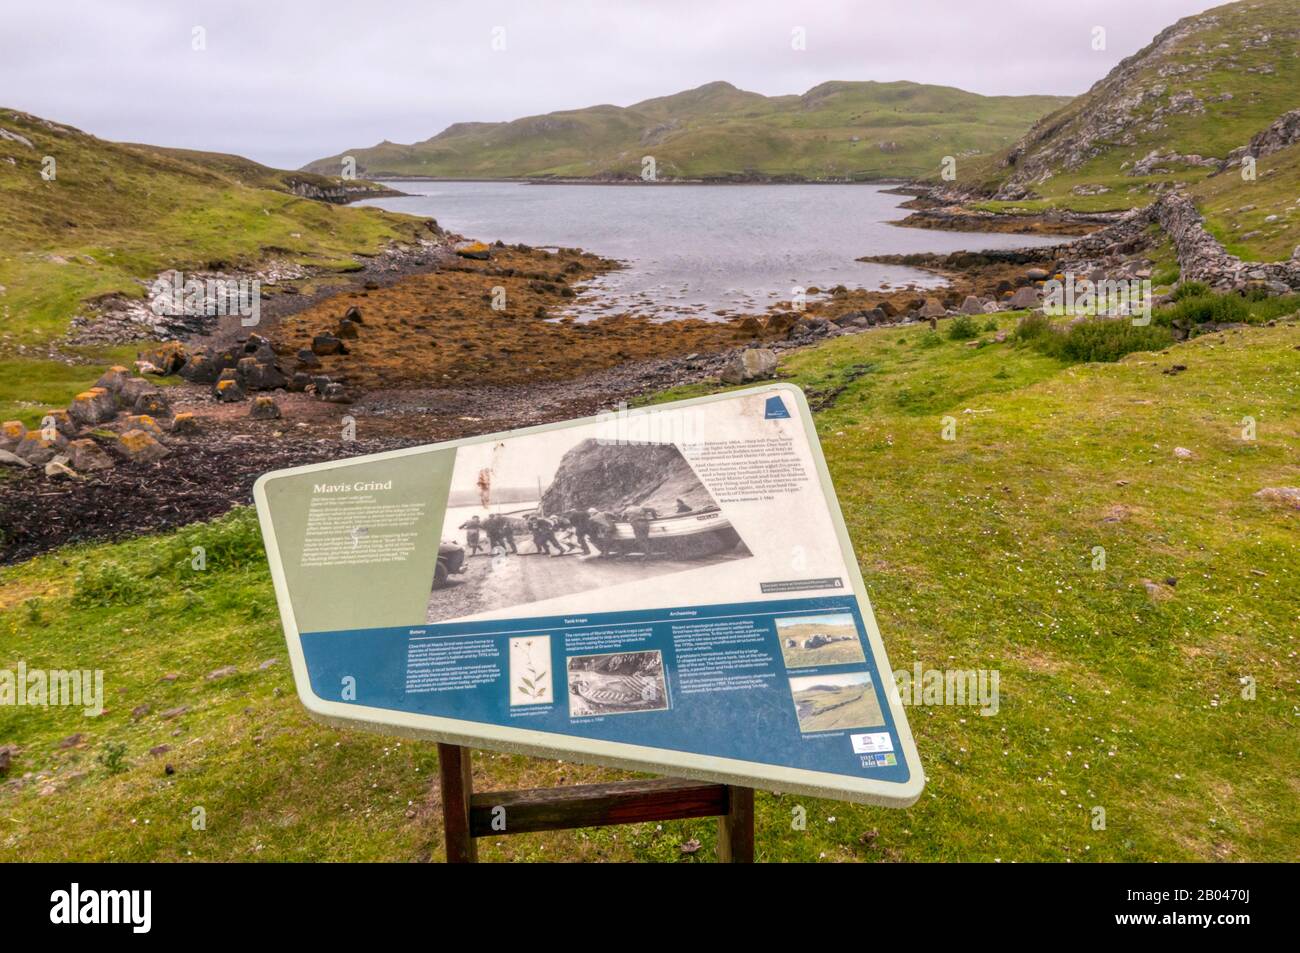 An interpretive sign at Mavis Grind in Shetland. Stock Photo